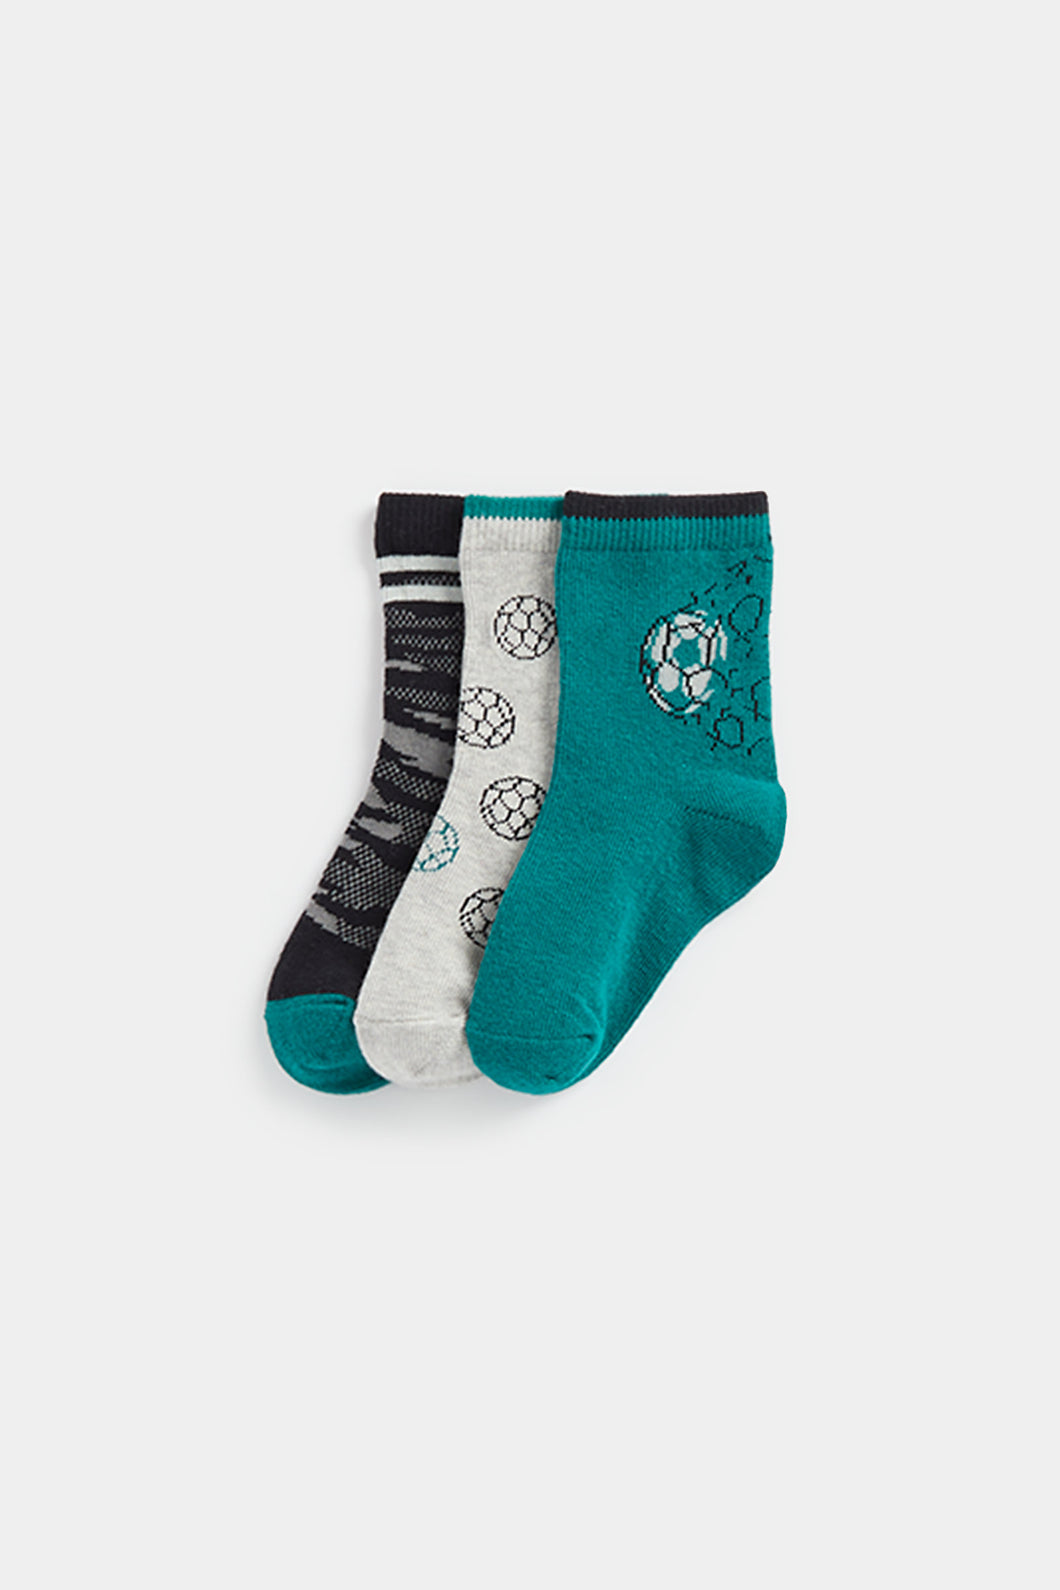 Mothercare Football Socks- 3 Pack